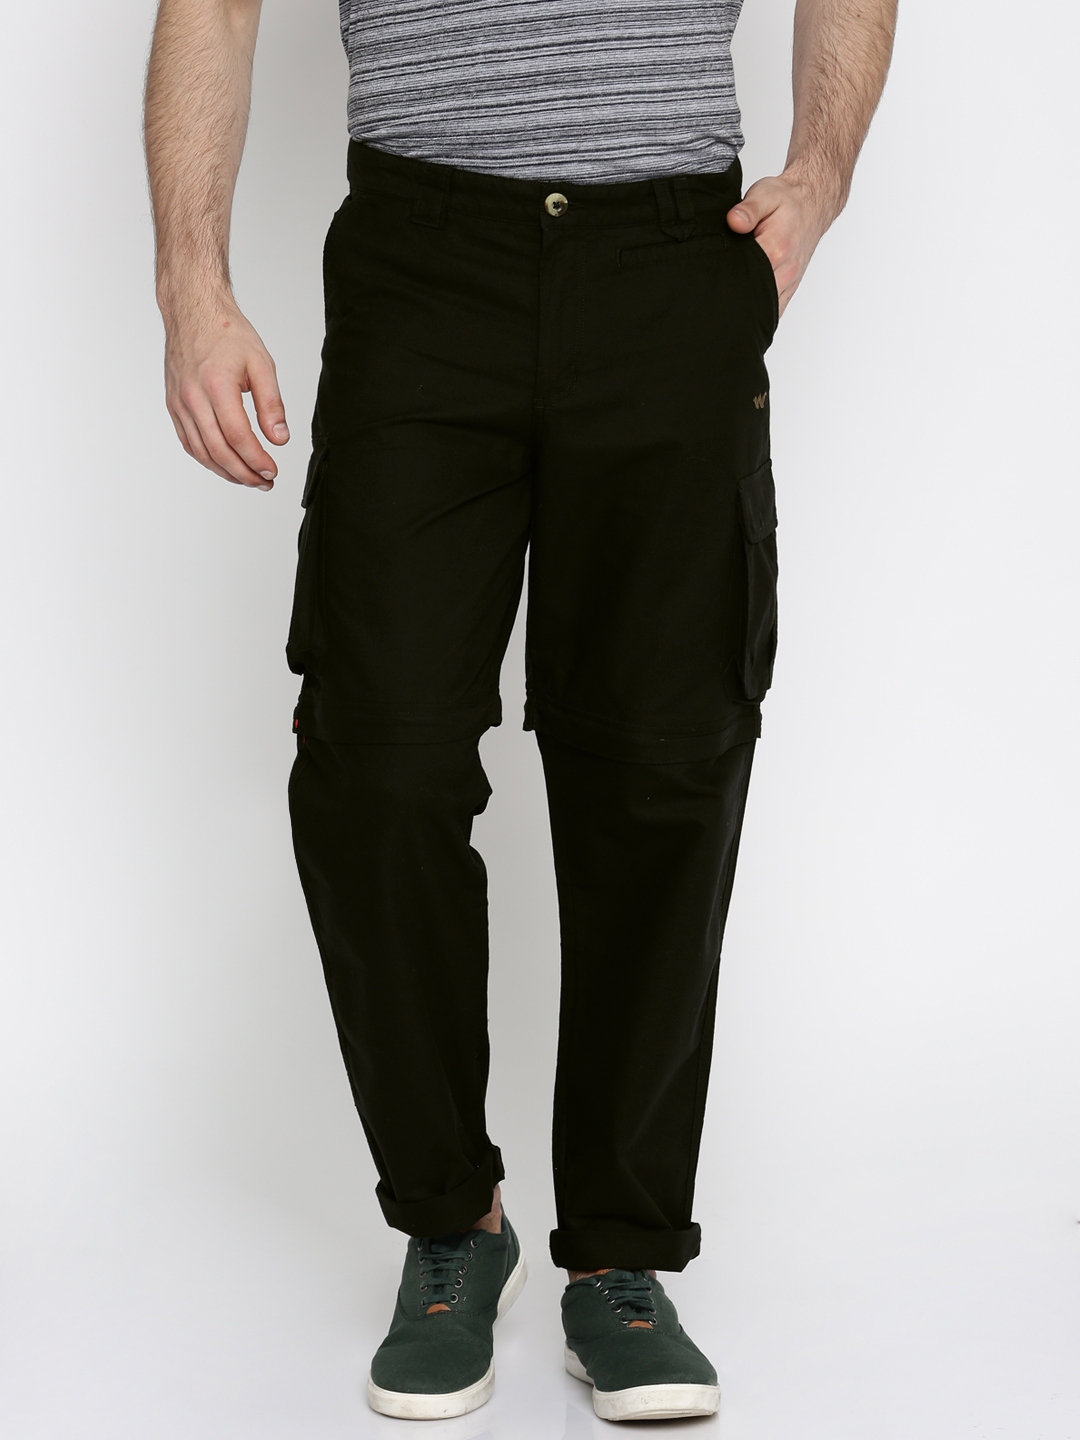 Raymond Black Trousers - Buy Raymond Black Trousers online in India